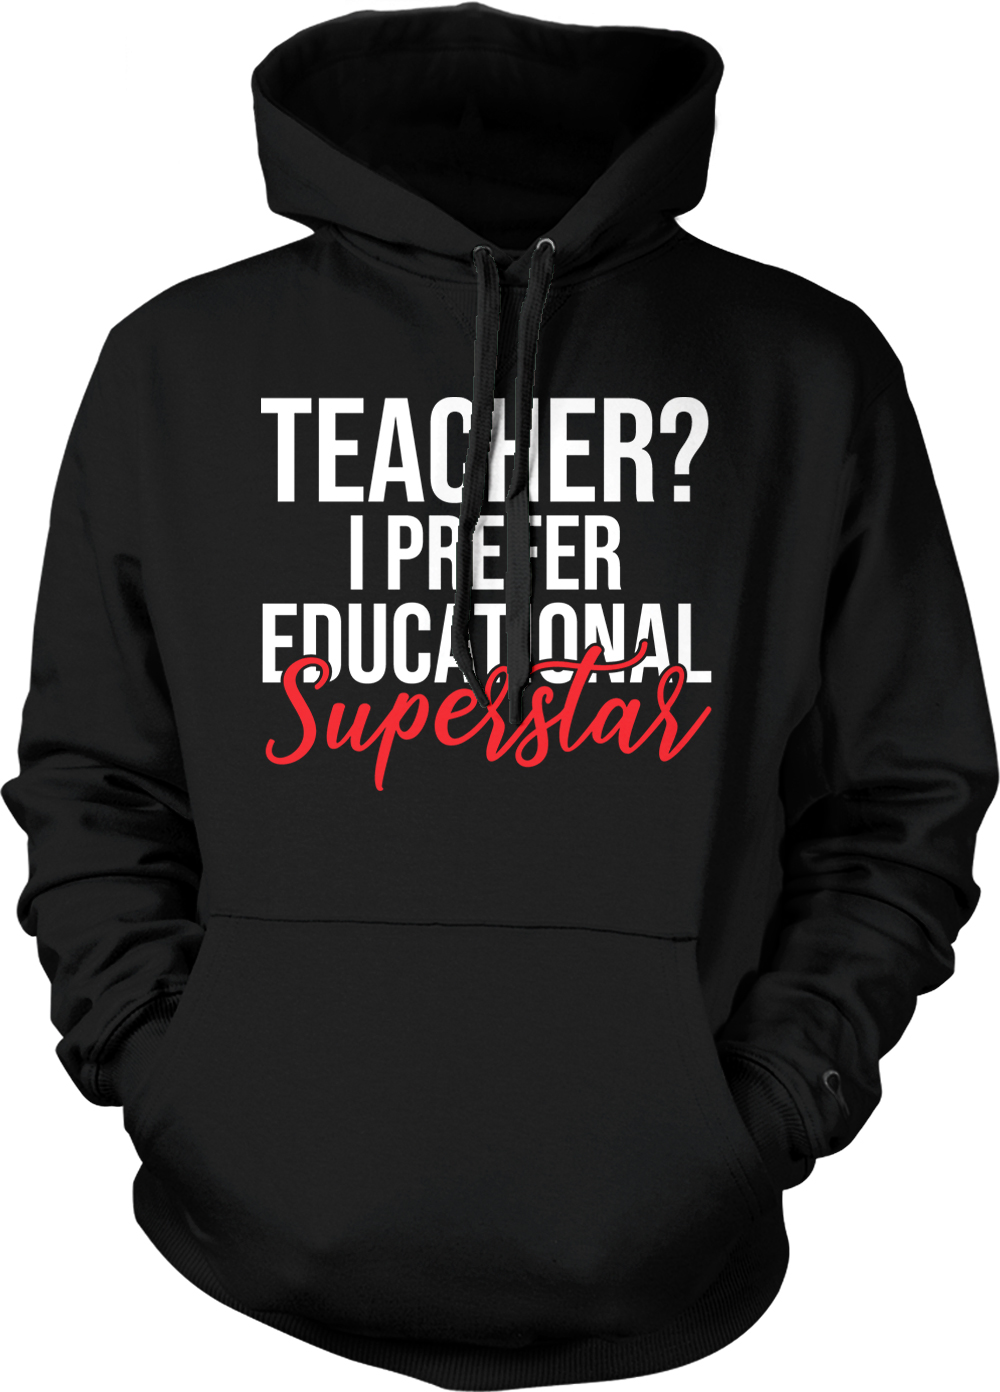 Teacher? I Prefer Educational Superstar - Funny Unisex Hoodie | eBay